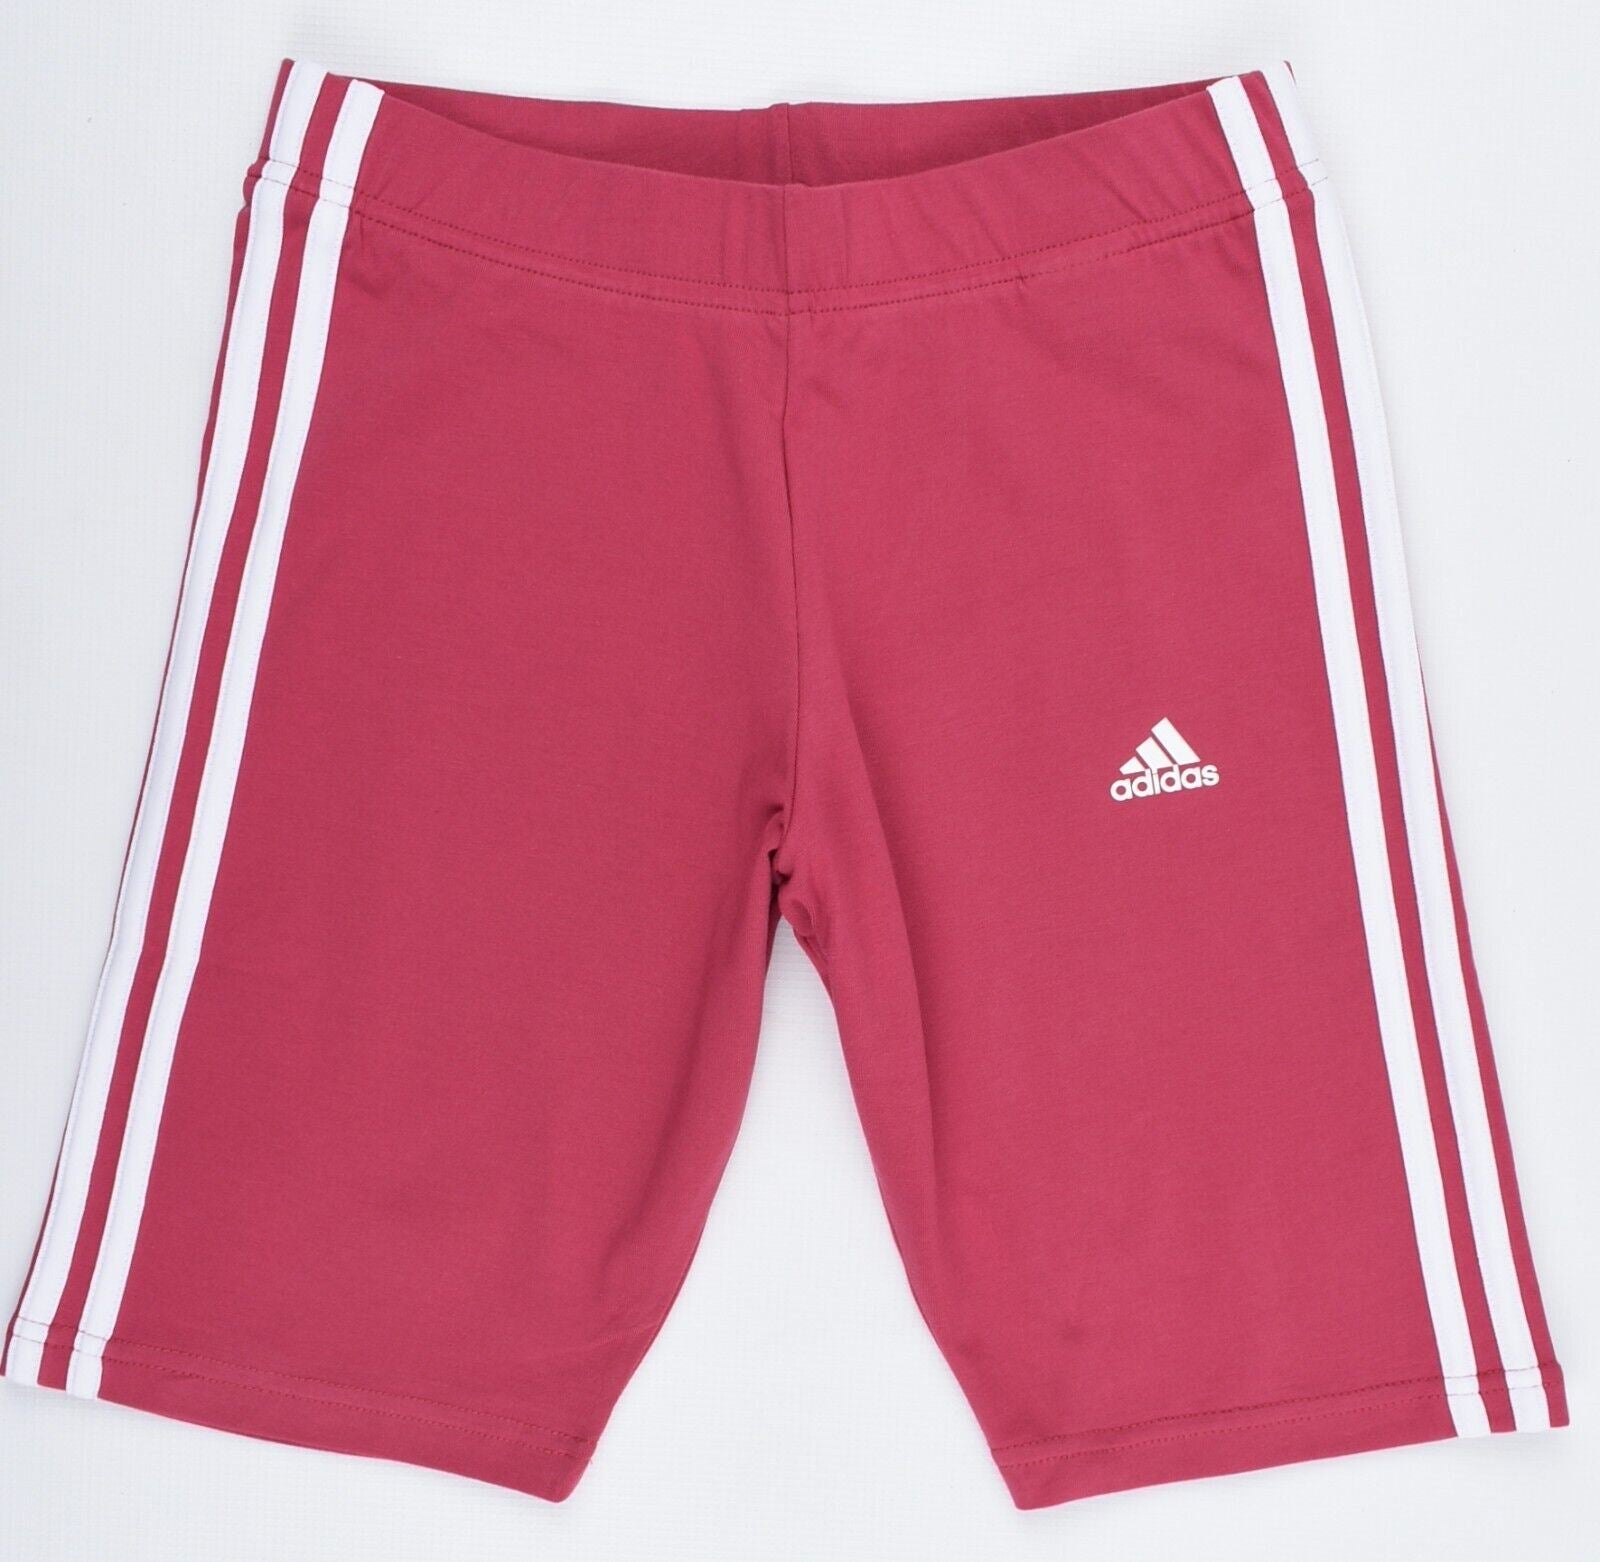 ADIDAS Women's 3 Stripes Essential Short Leggings Shorts, Pink, size XS (UK 4-6)